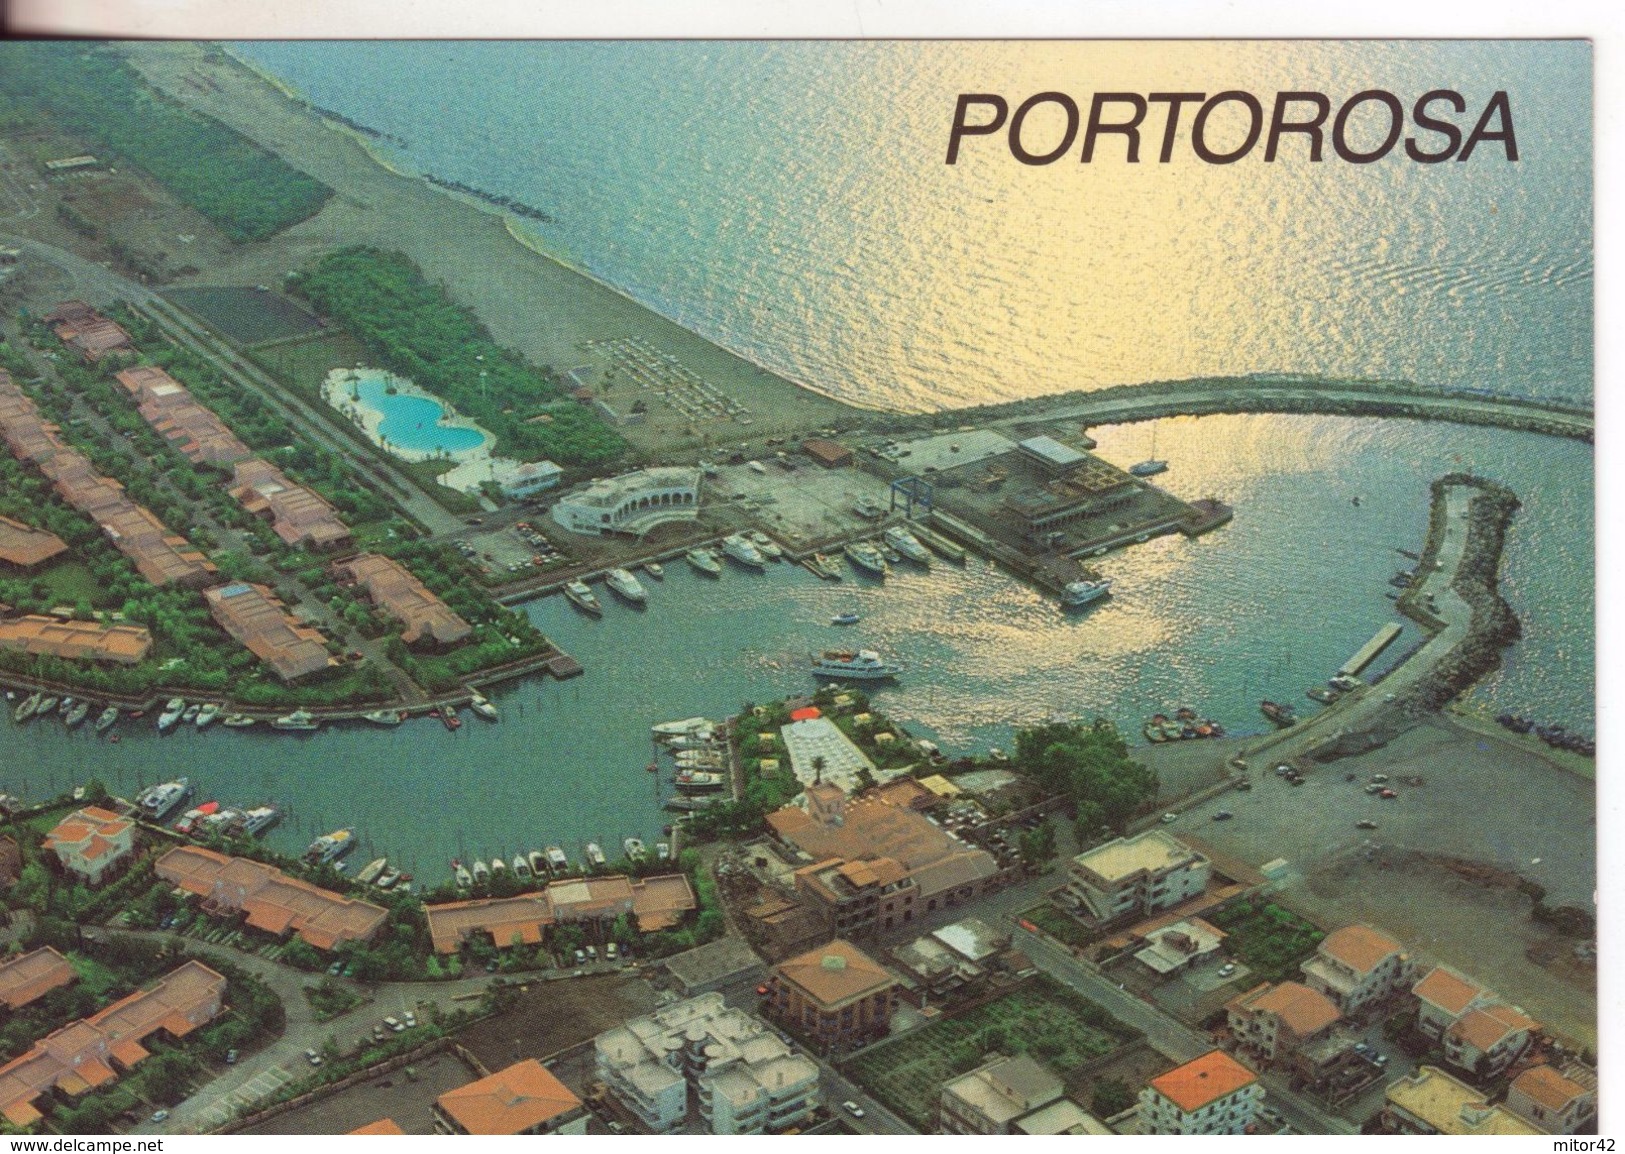 151-Portorosa-Messina-Sicilia-Porto Turistico-Nuova-Nouveau-New - Messina